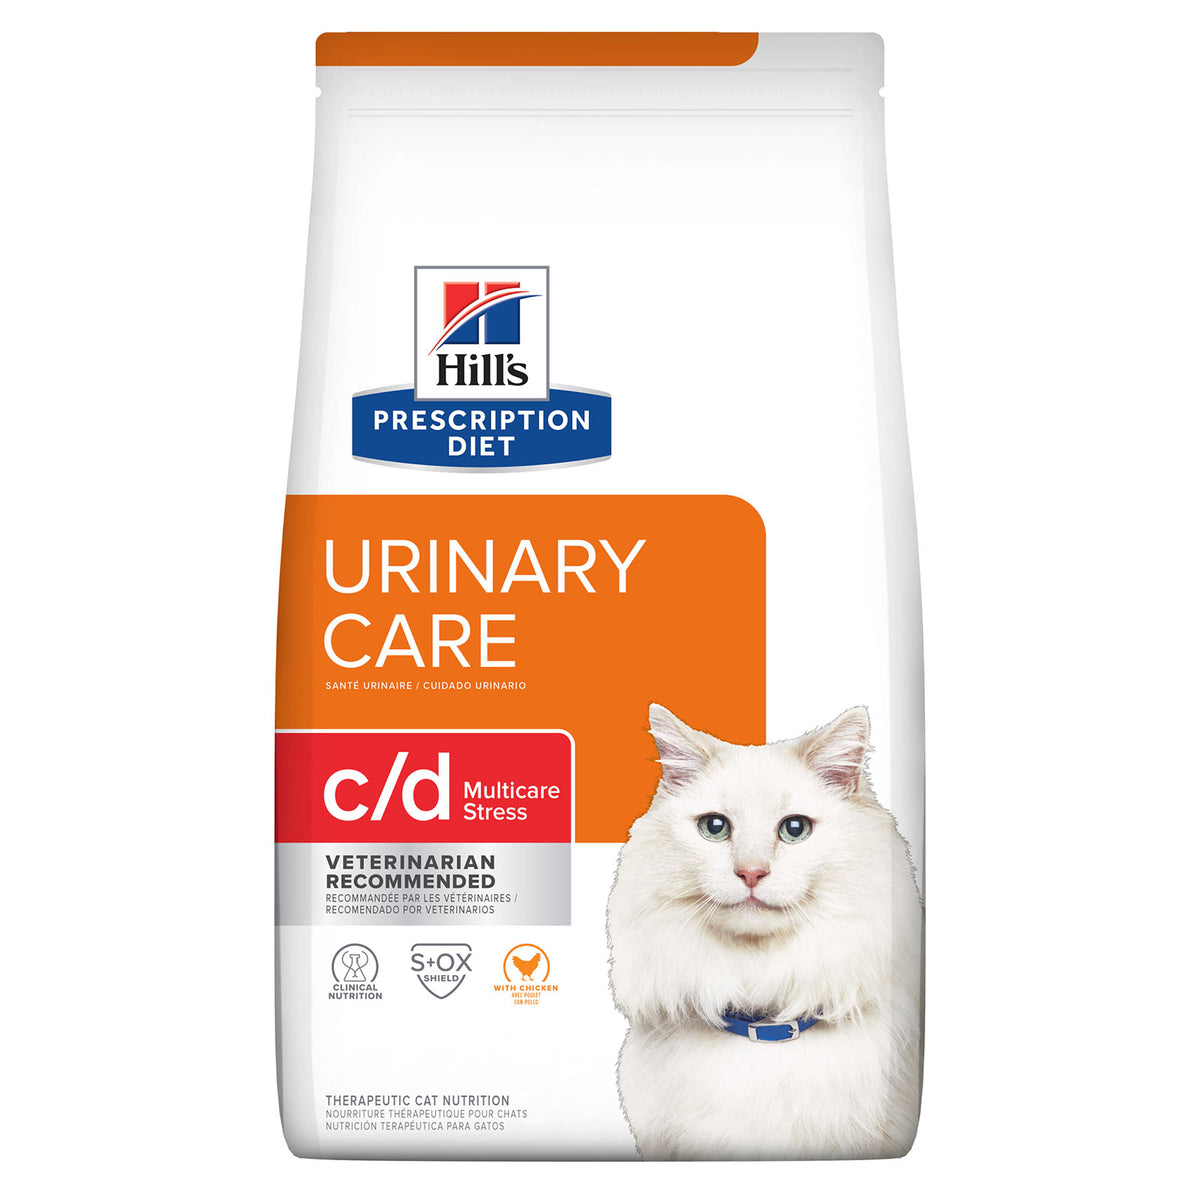 Hill's Prescription Diet C/D Multicare Stress Urinary Dry Cat Food